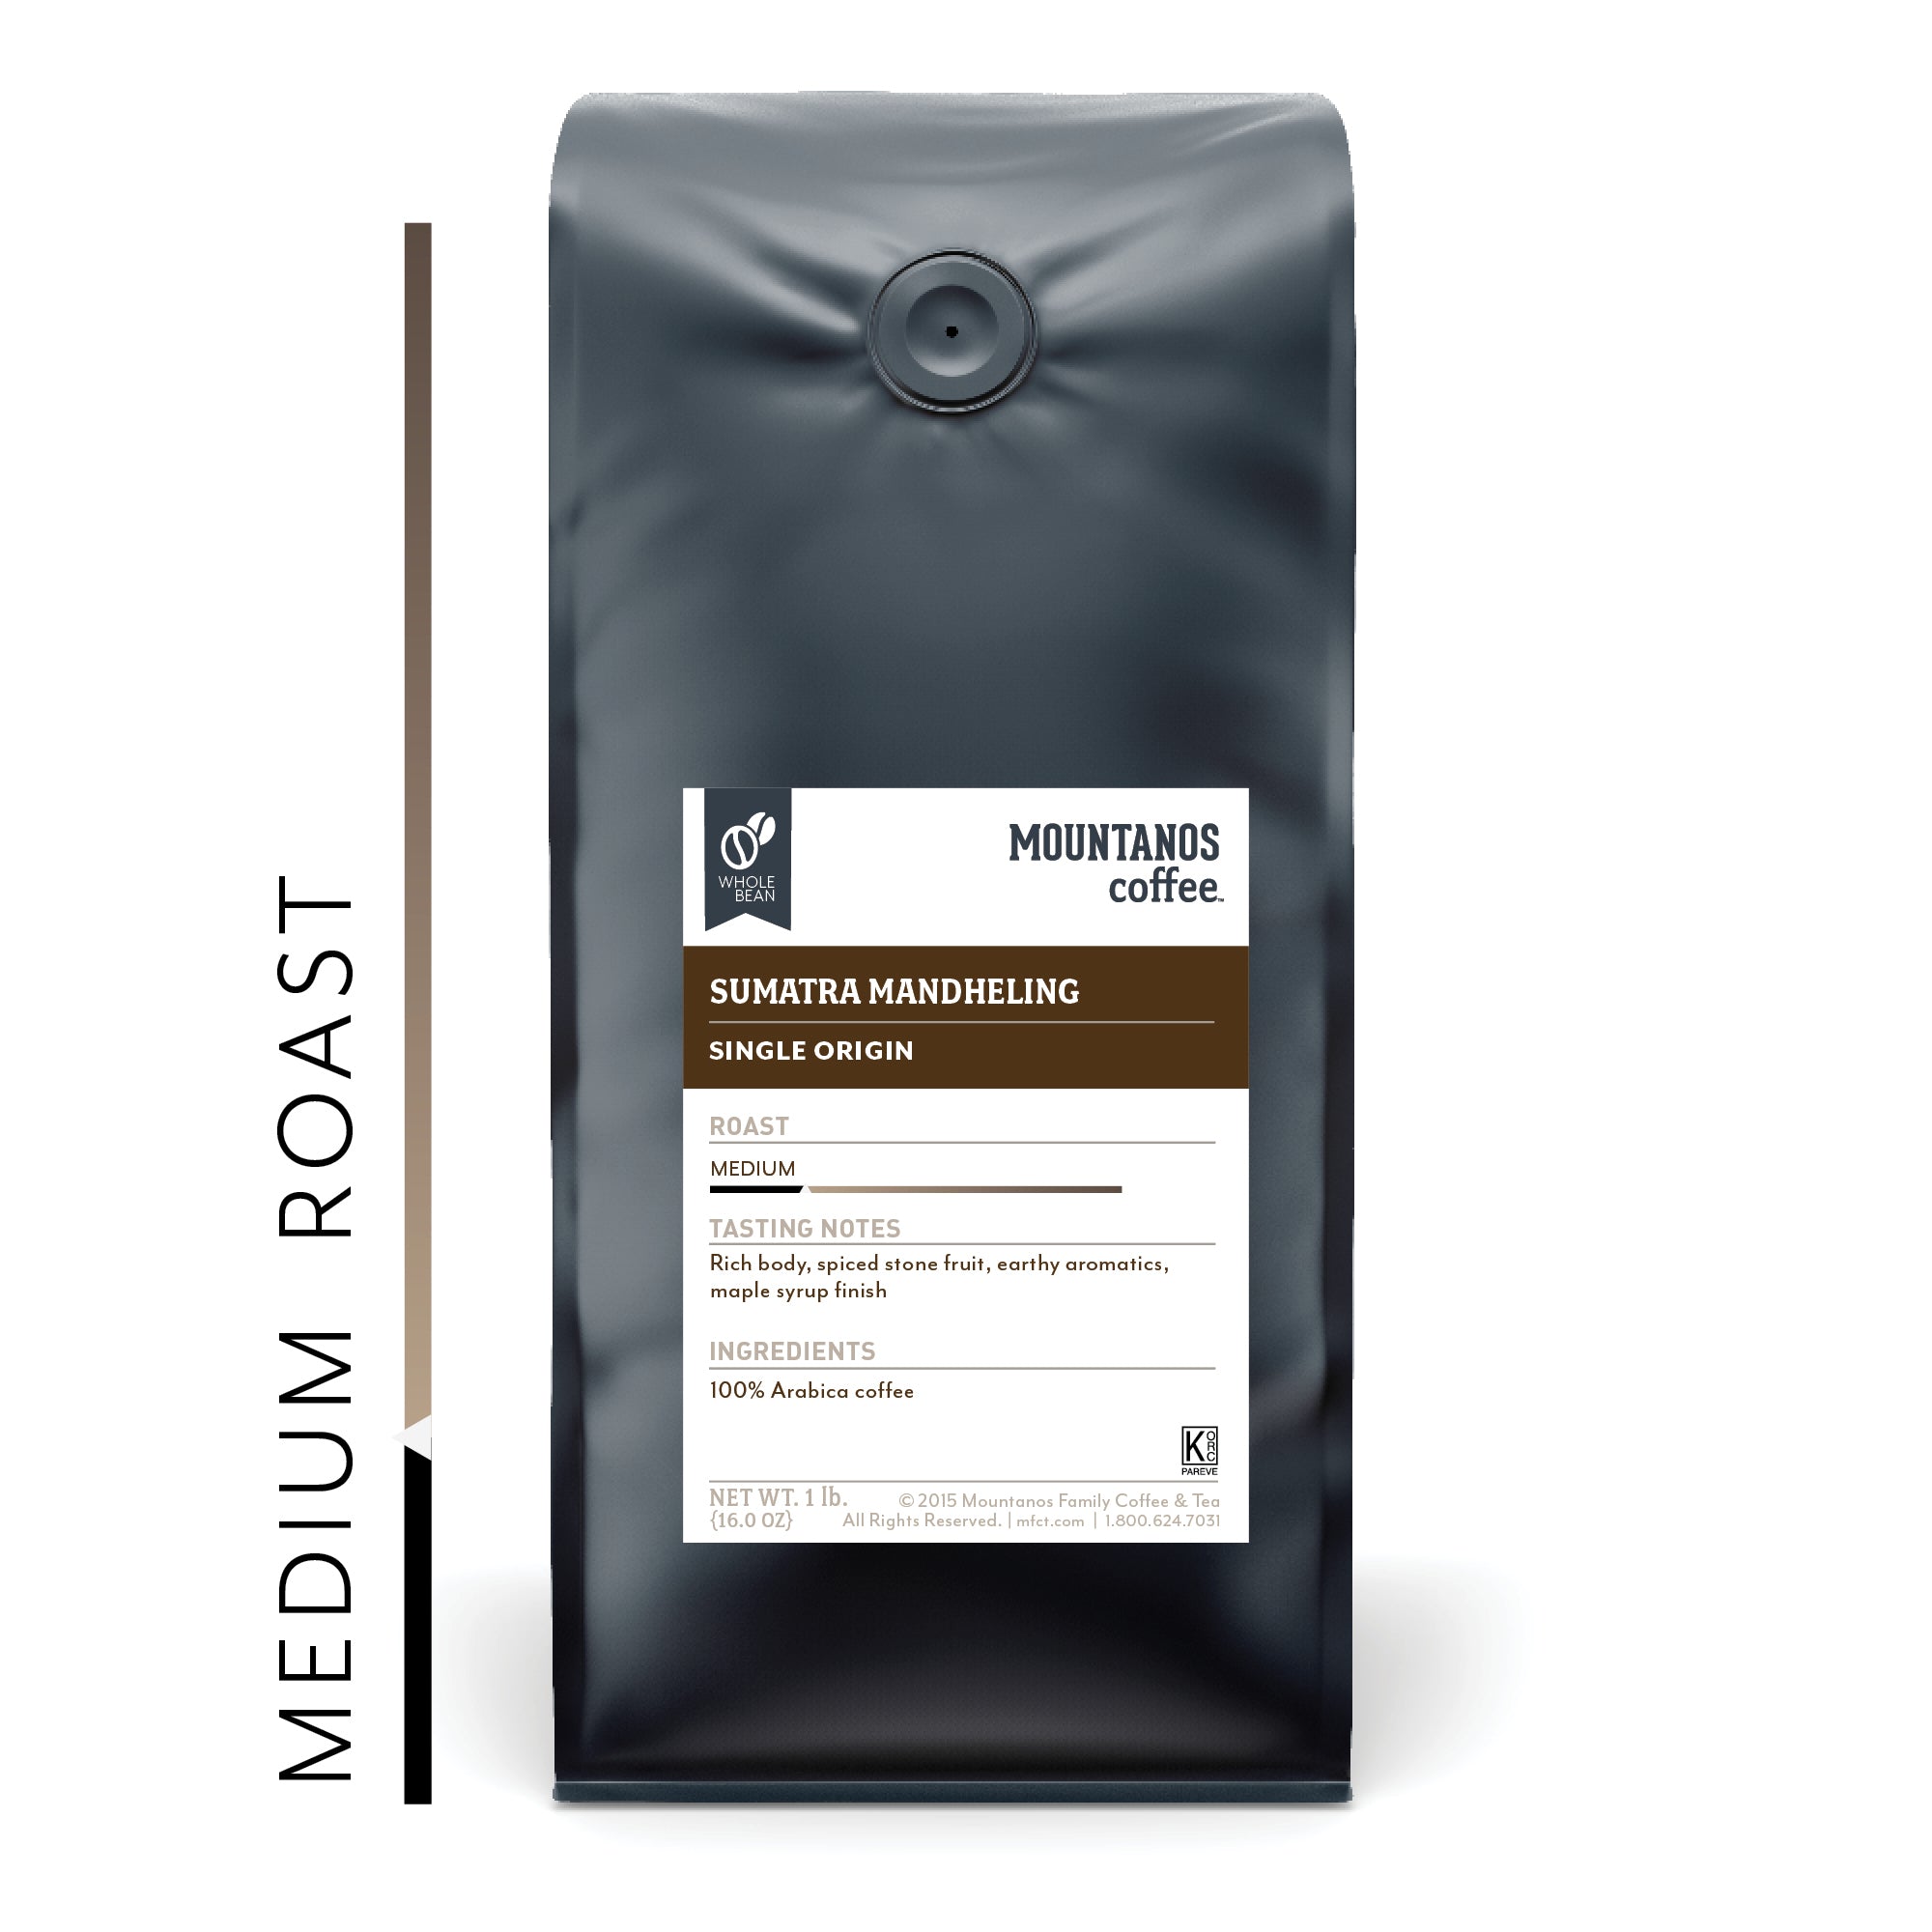 sumatra mandheling coffee characteristics